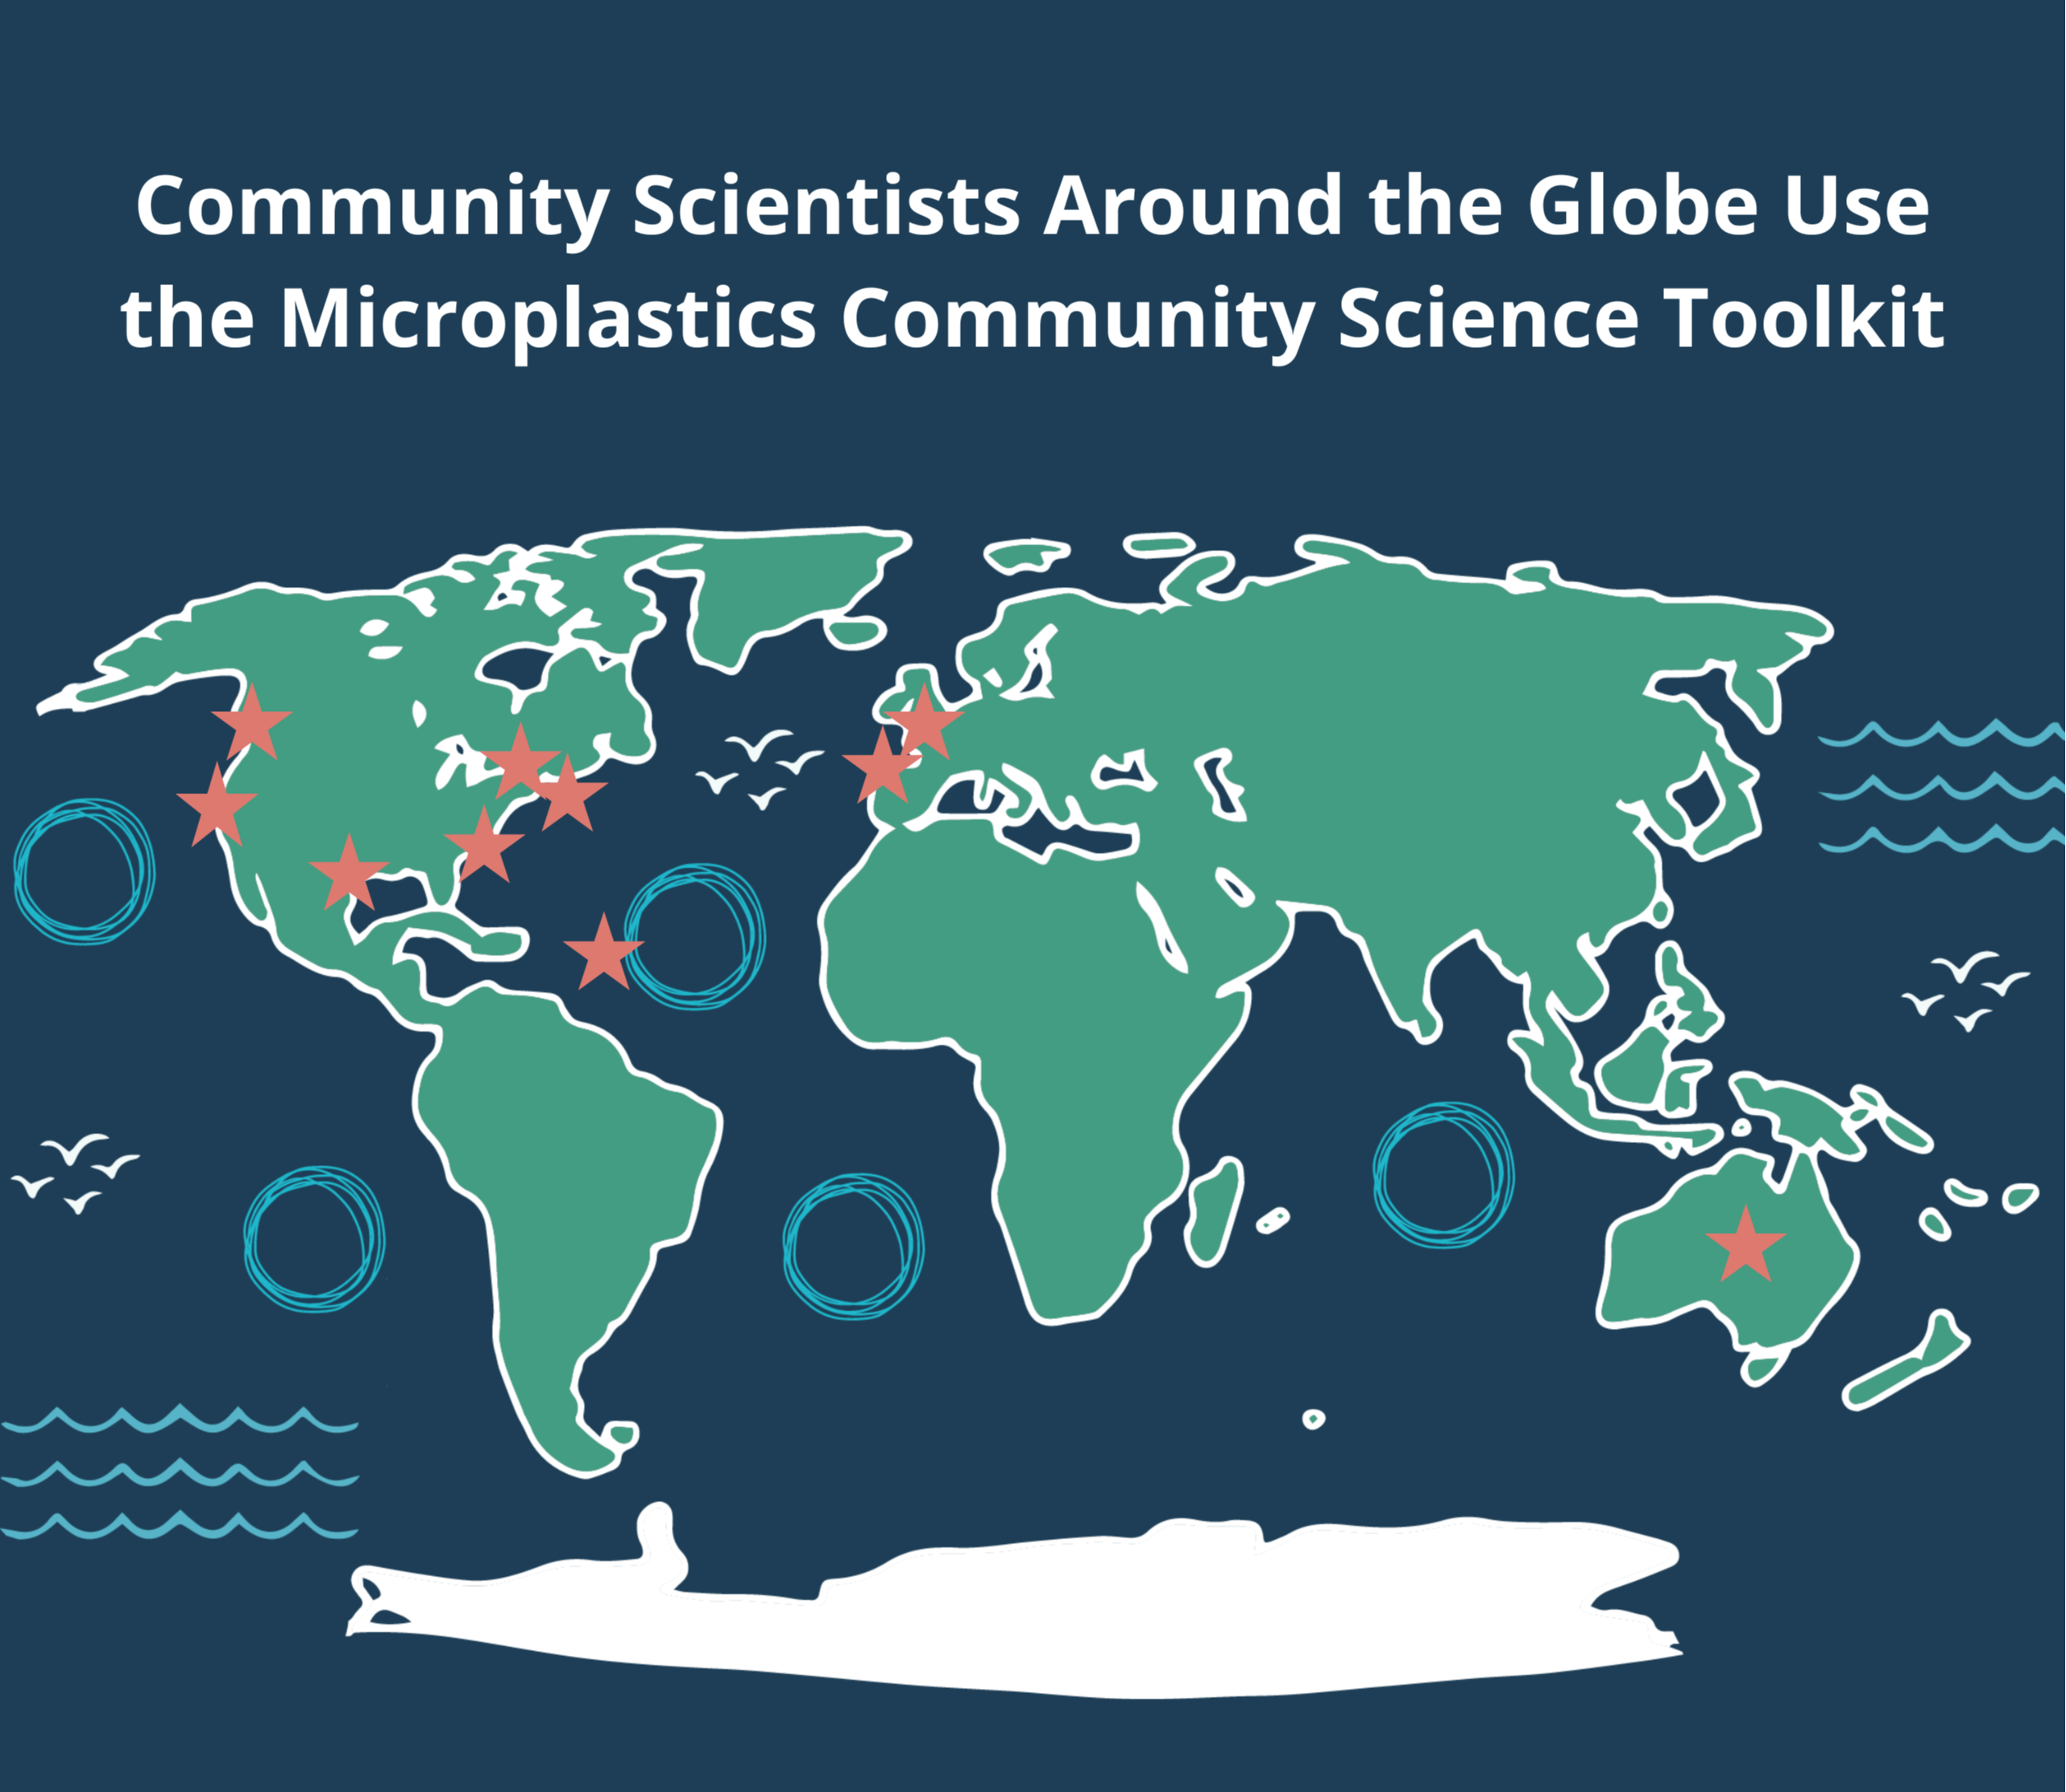 Microplastics Community Science Toolkit 9-1